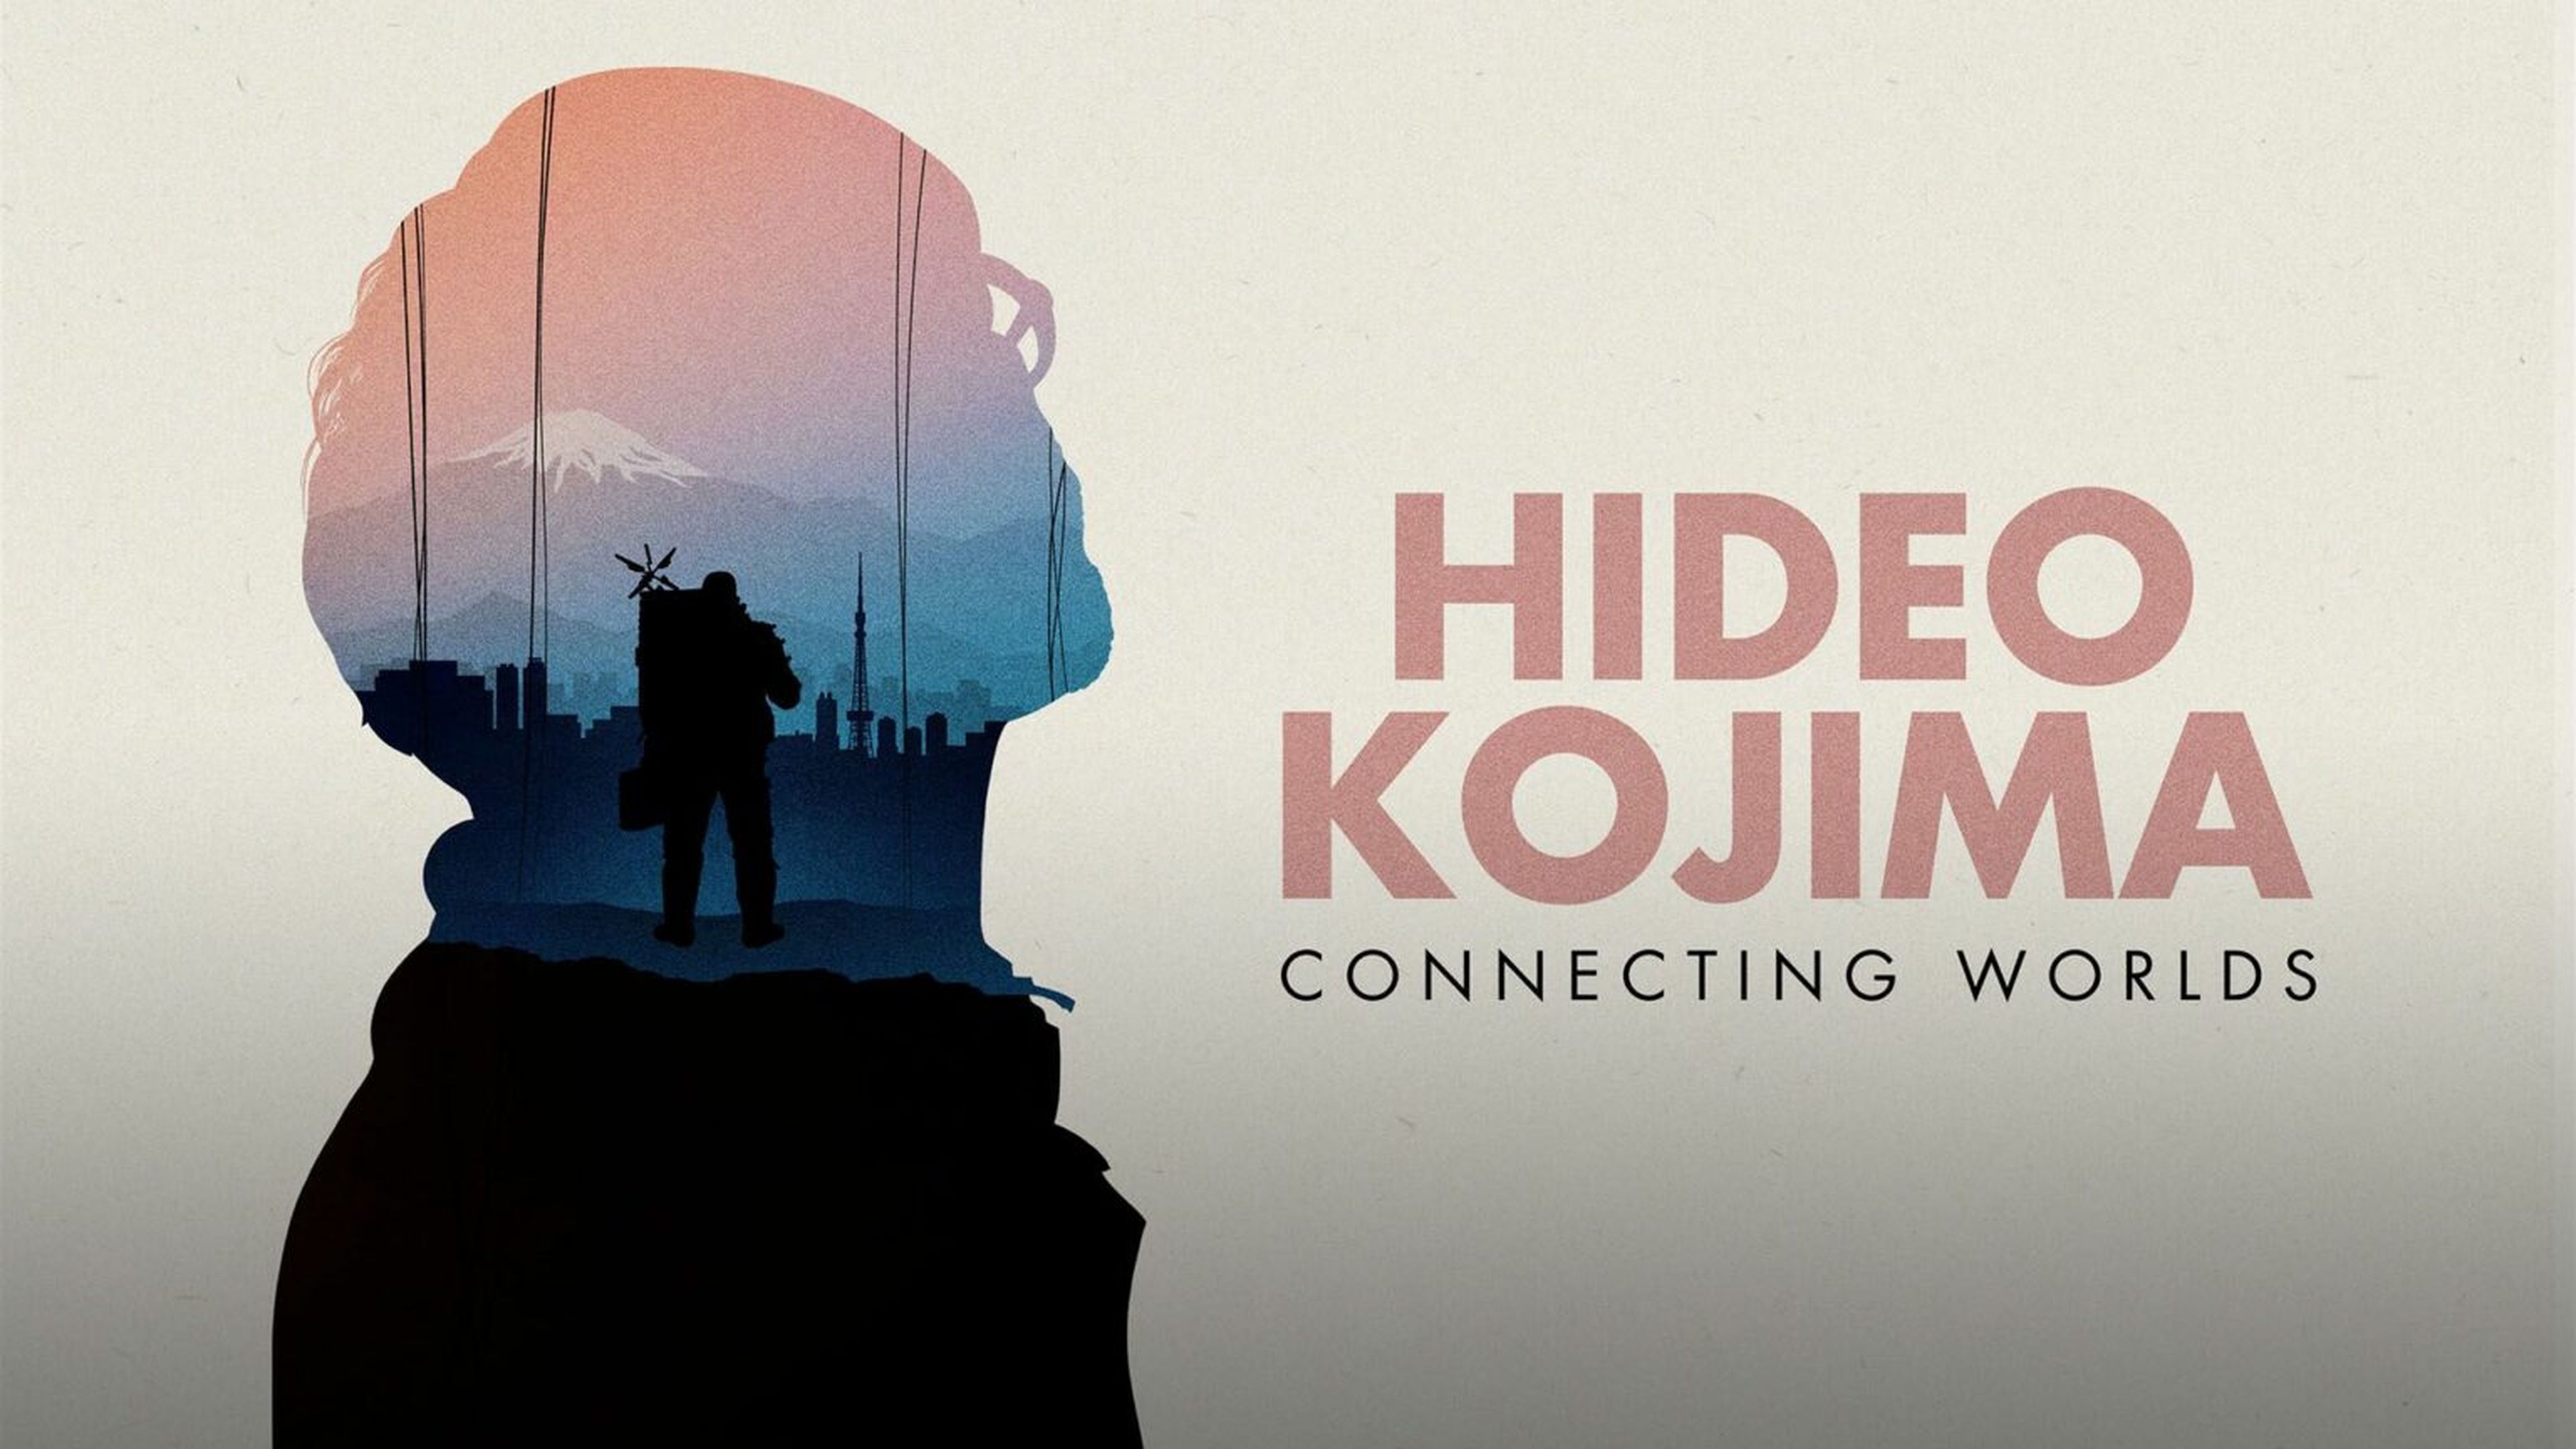 Hideo Kojima Connecting World